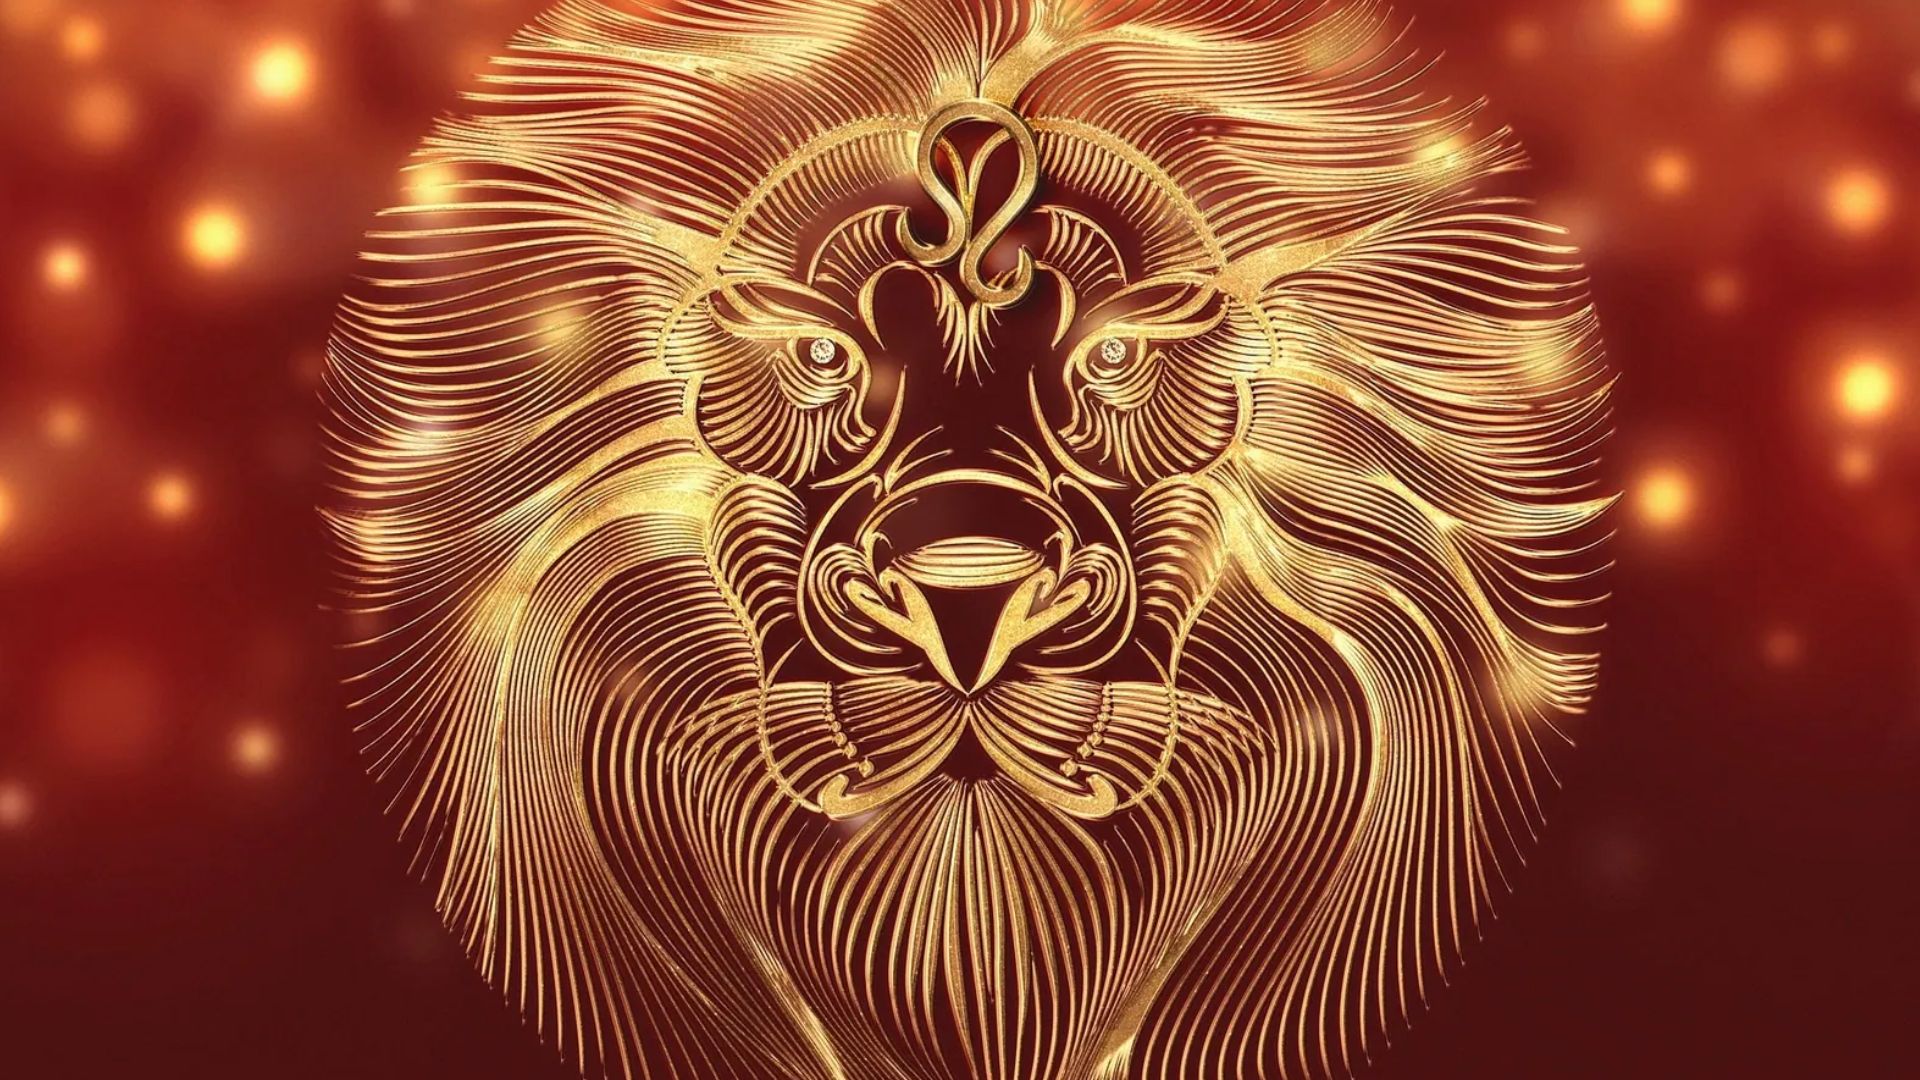 Golden Lion In Red Background